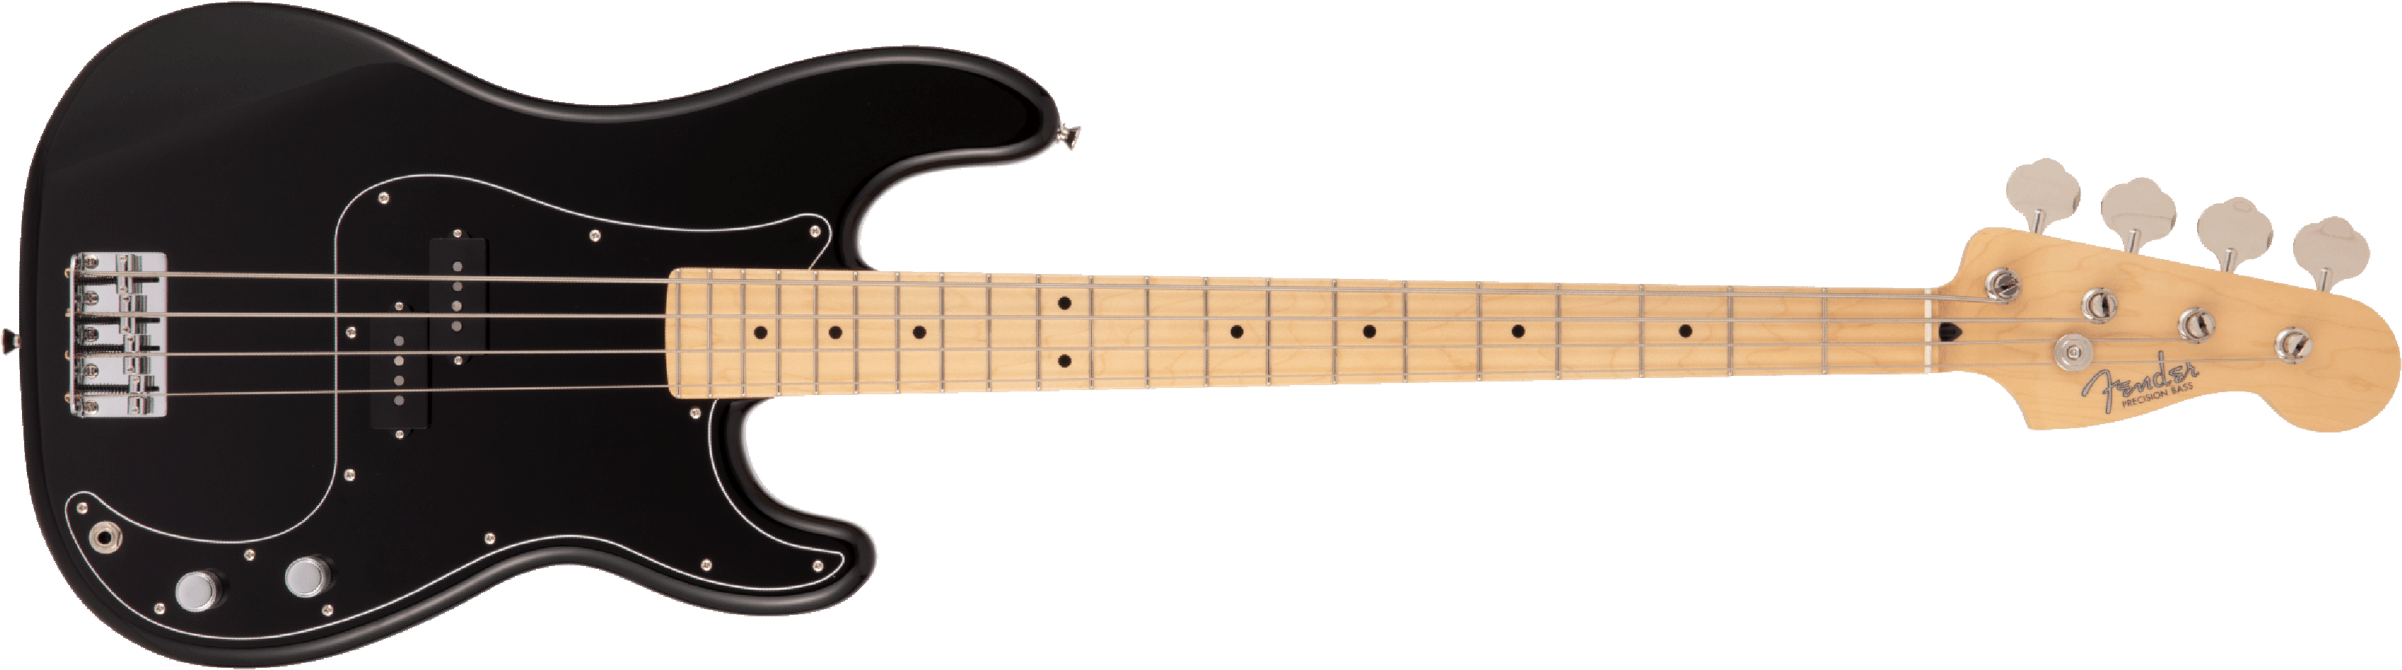 Fender Precision Bass Hybrid Ii Japan Mn - Black - Solid body elektrische bas - Main picture